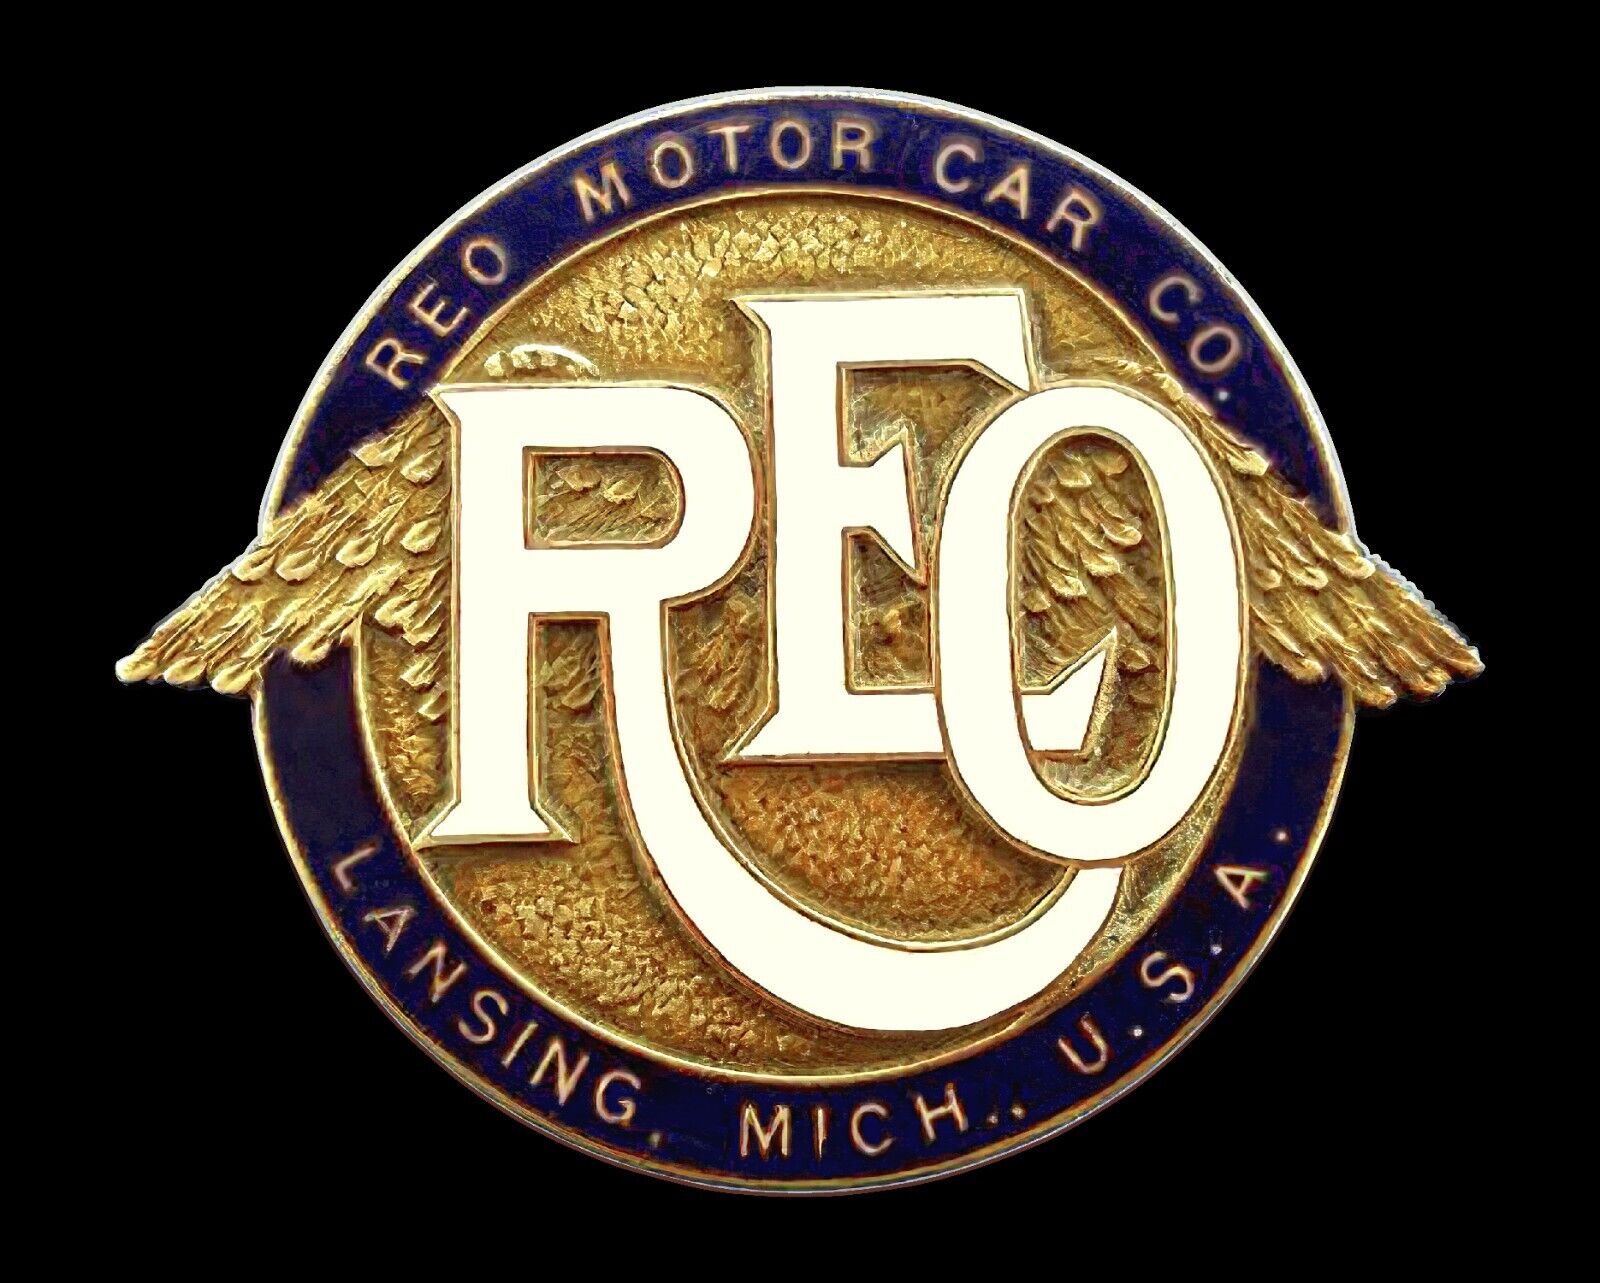 REO Motor Car Company - Vintage 1928 Radiator Emblem Sticker Decal